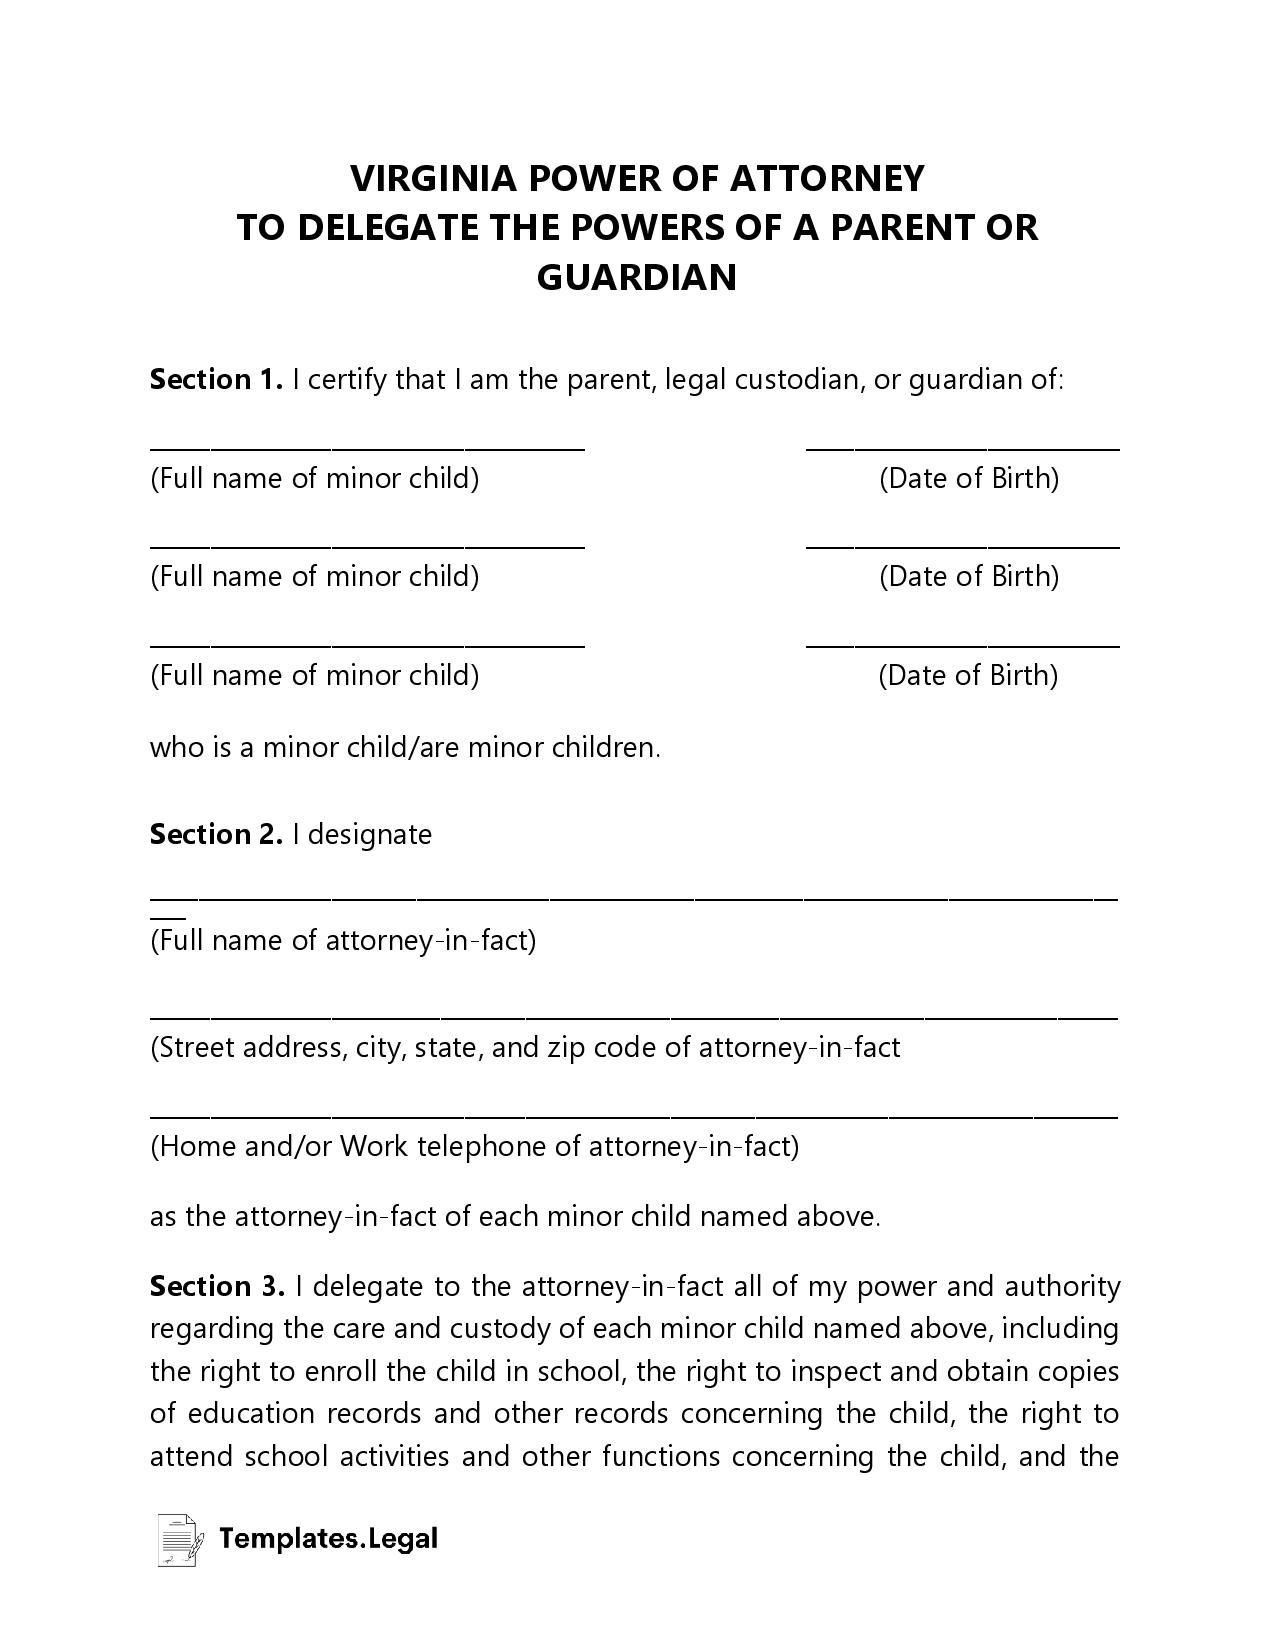 Virginia Minor (Child) Power of Attorney - Templates.Legal